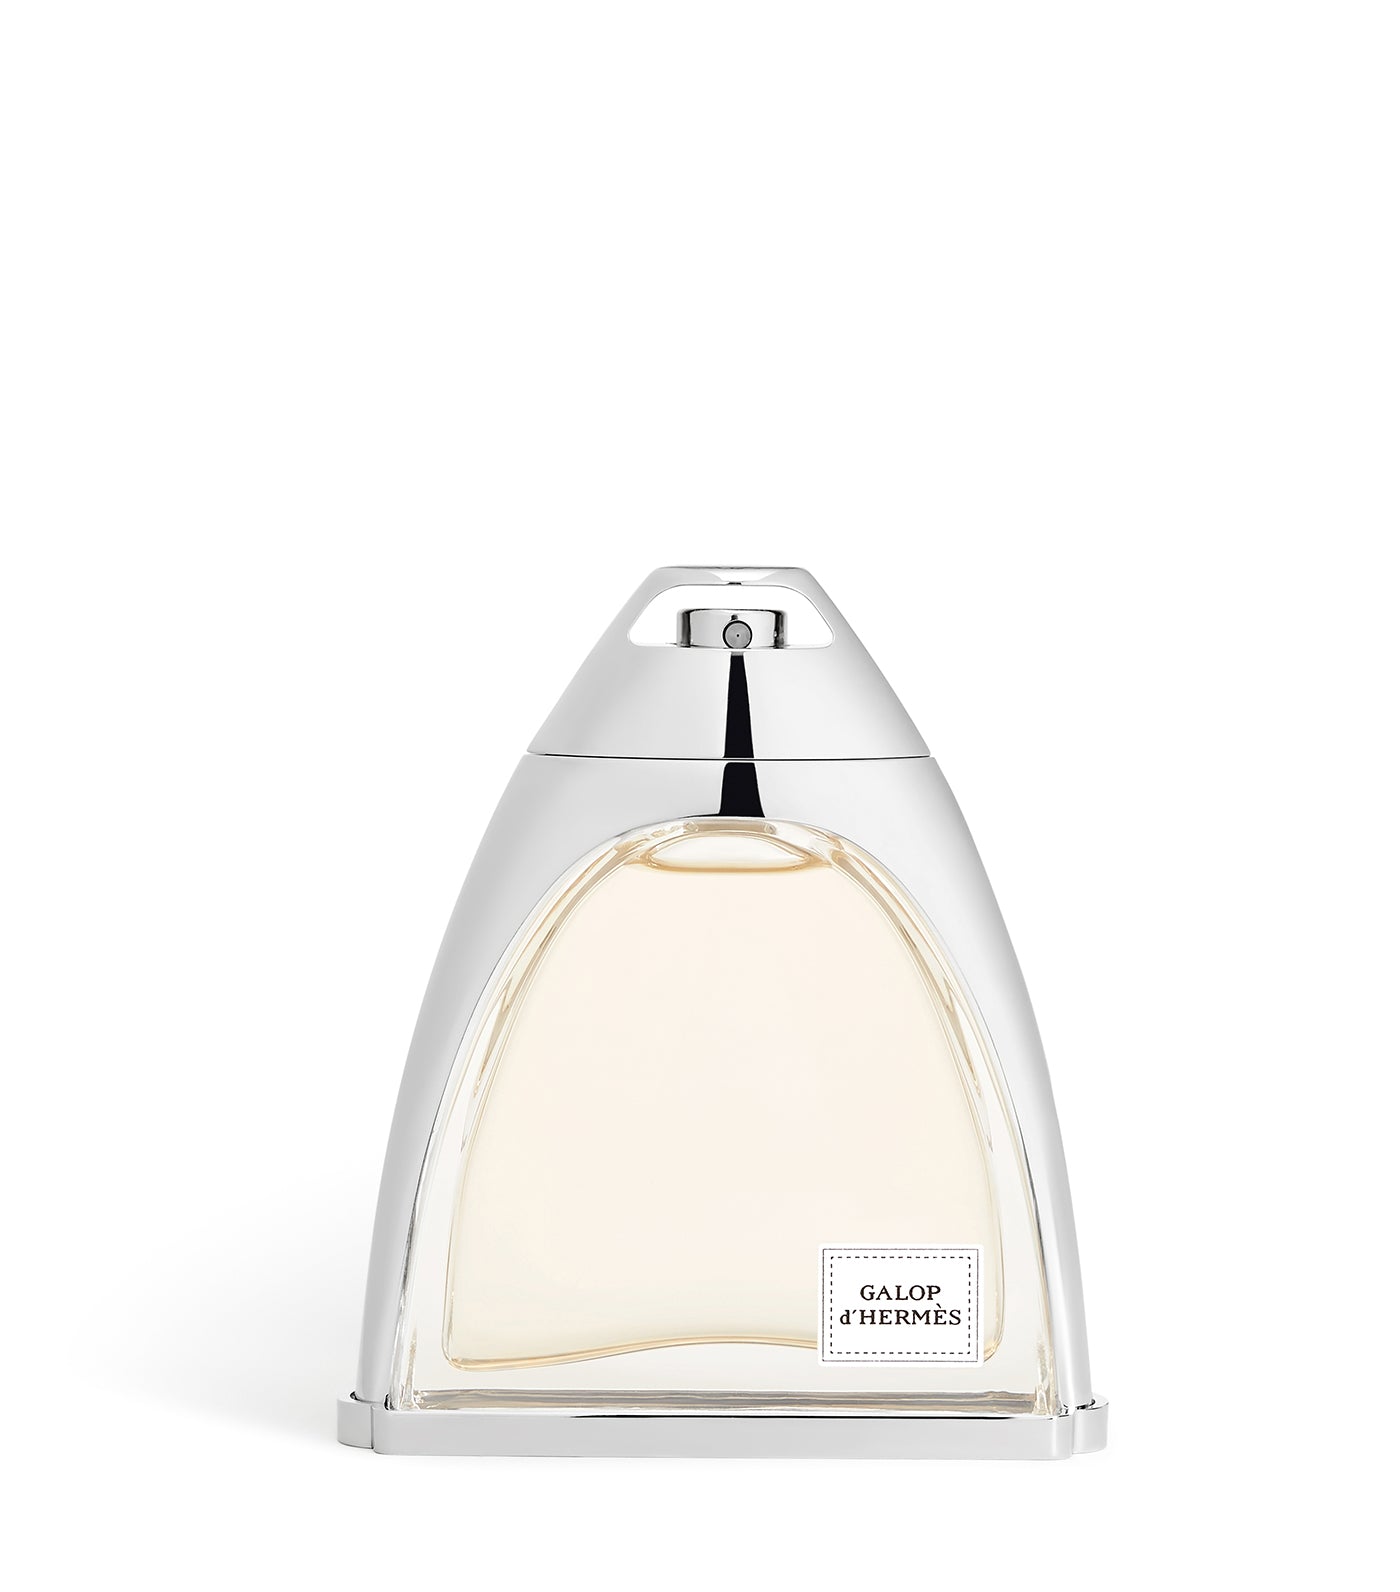 Galop d'Hermès Parfum 50ml